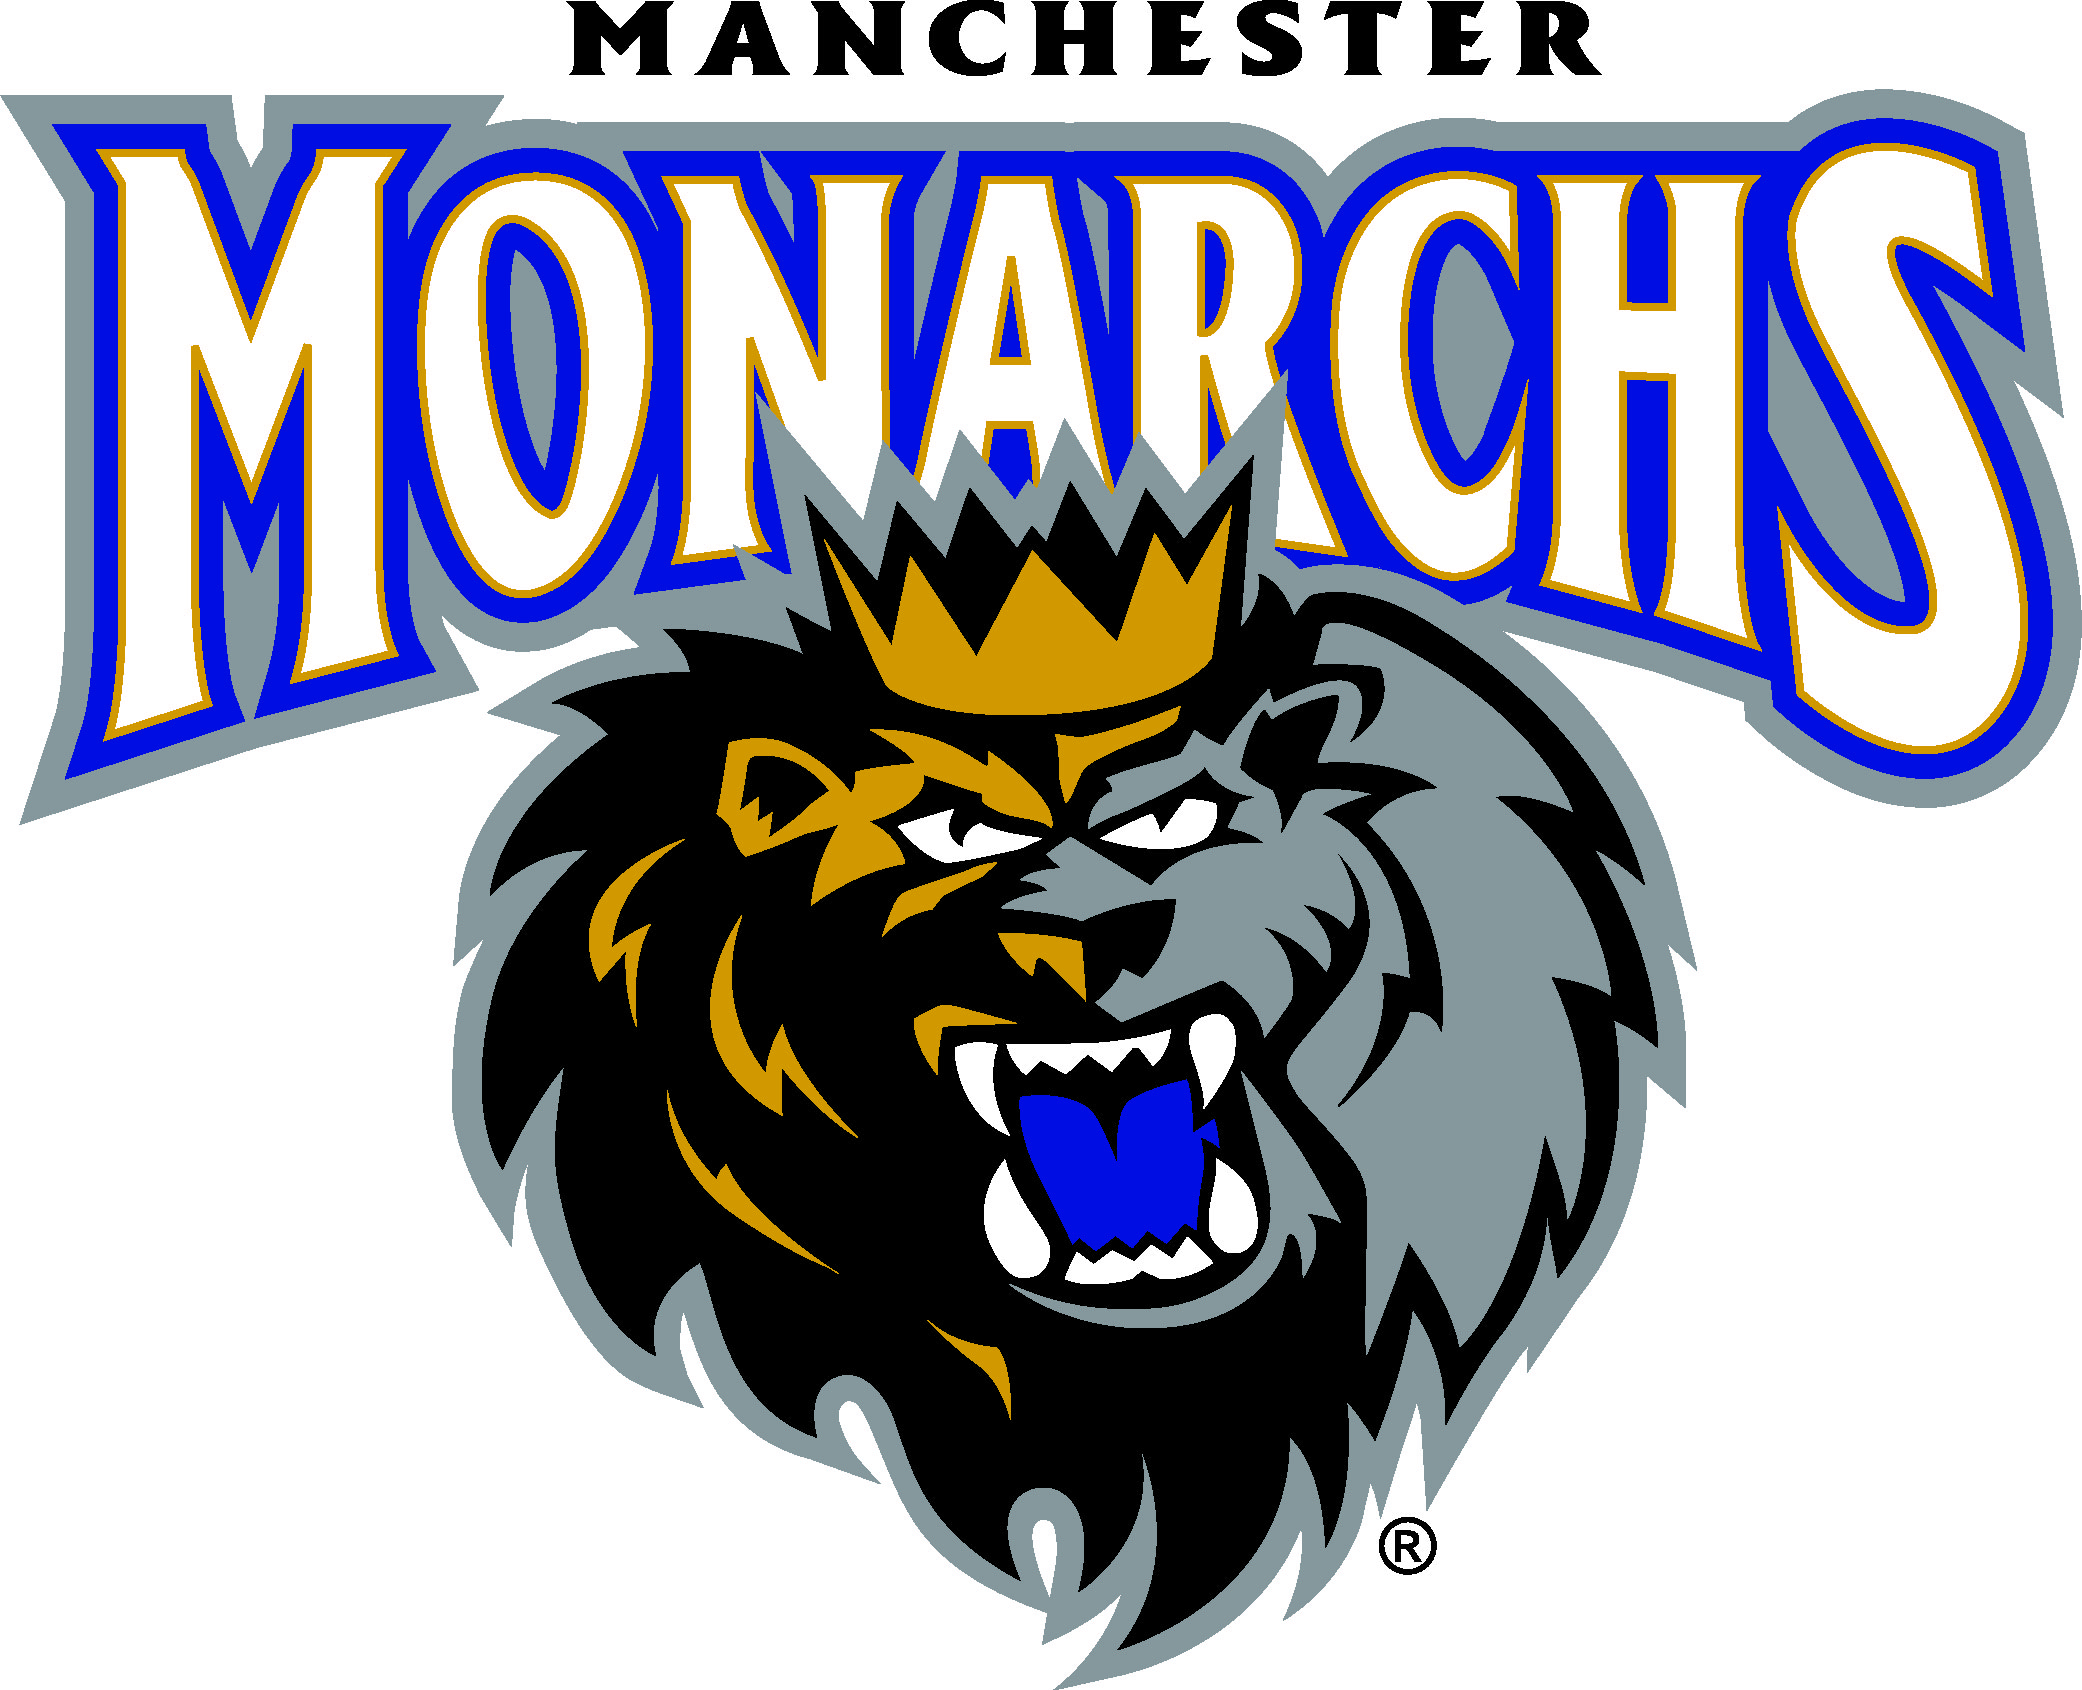 Manchester Monarchs Logo.jpg